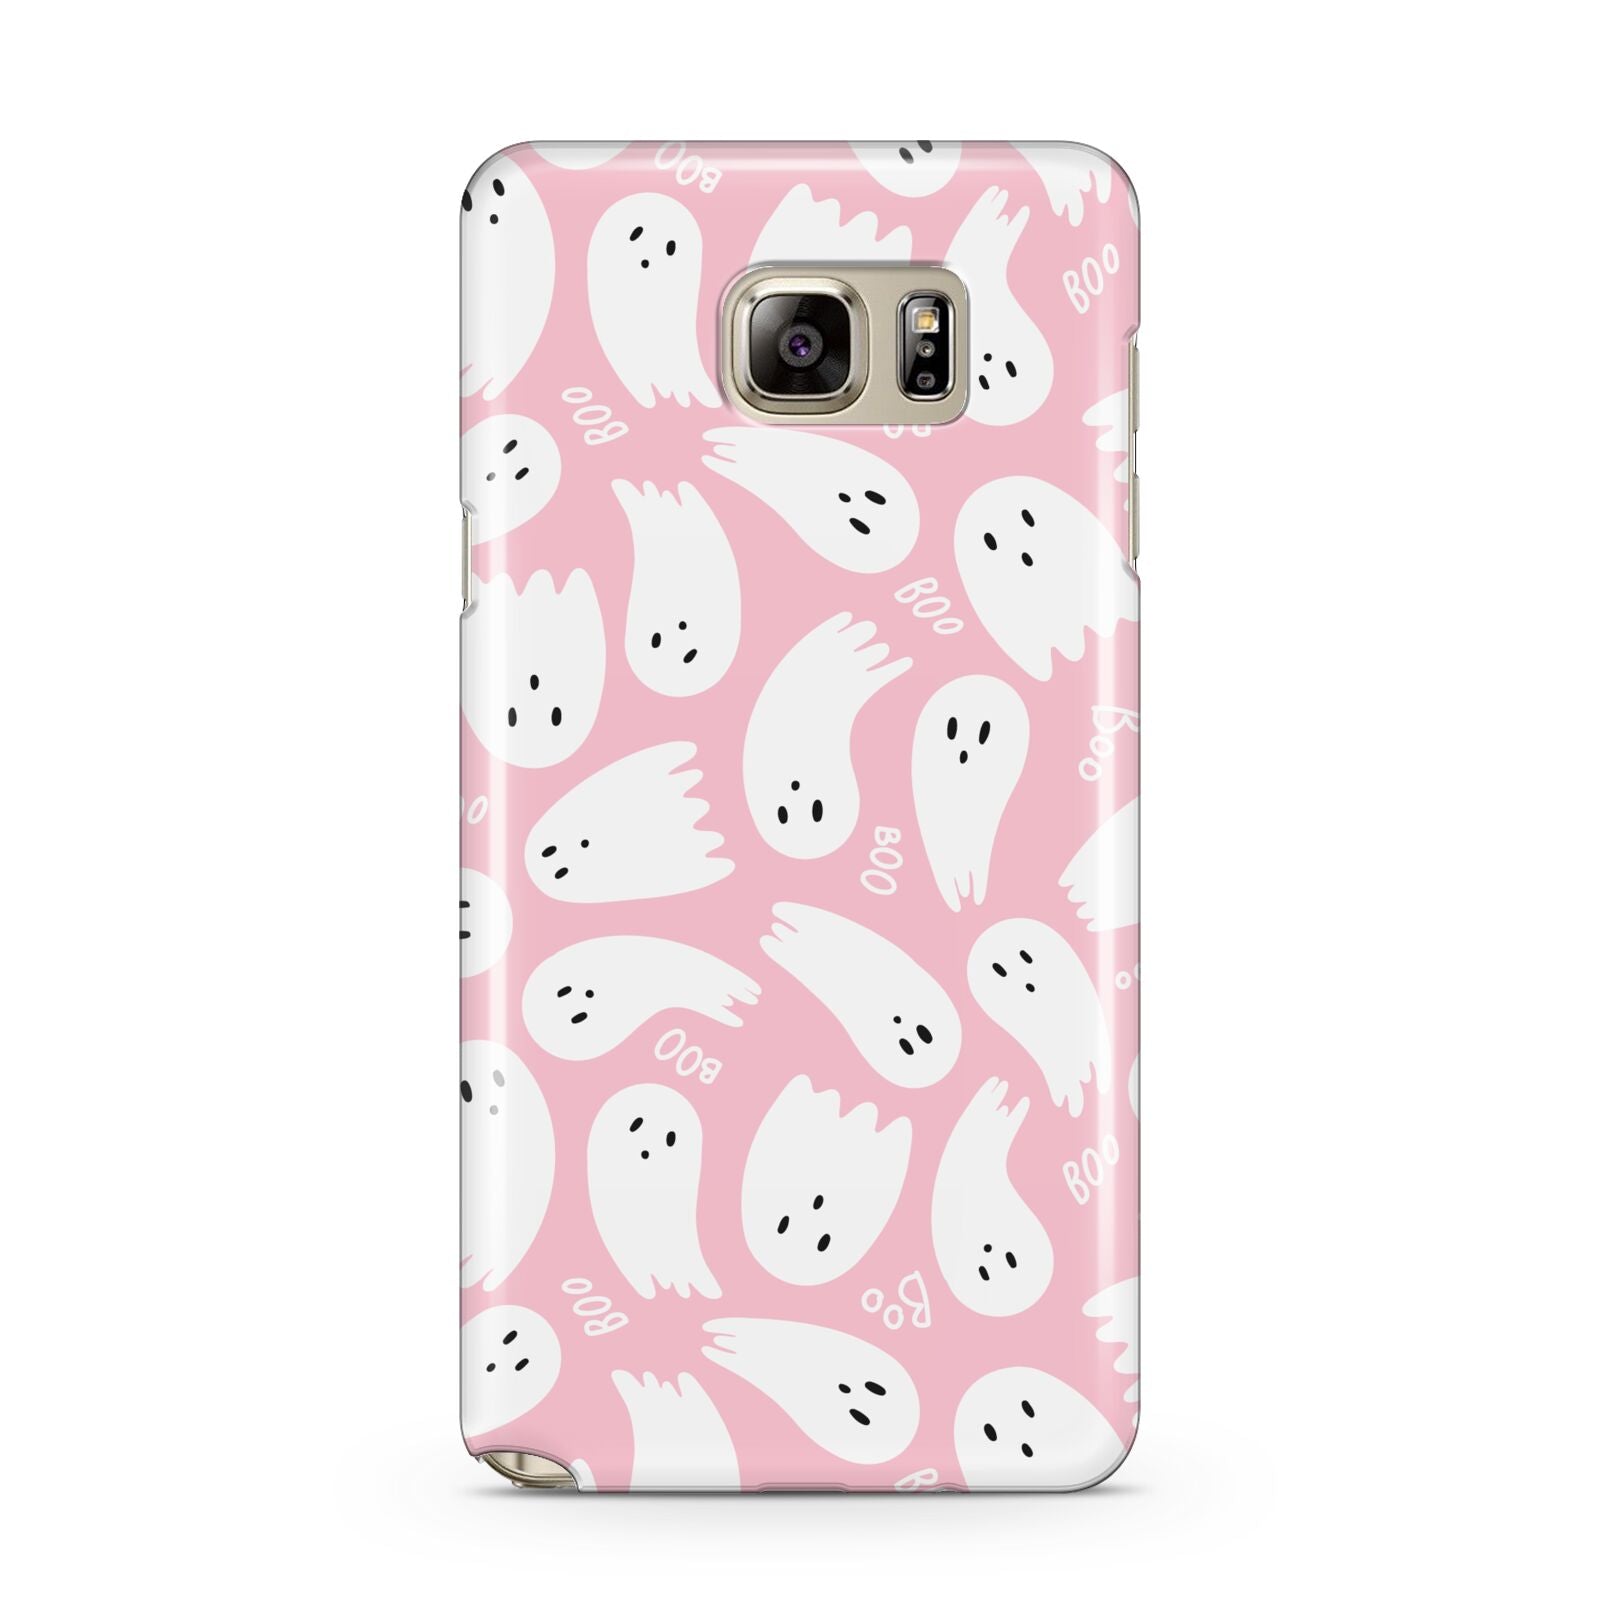 Pink Ghost Samsung Galaxy Note 5 Case